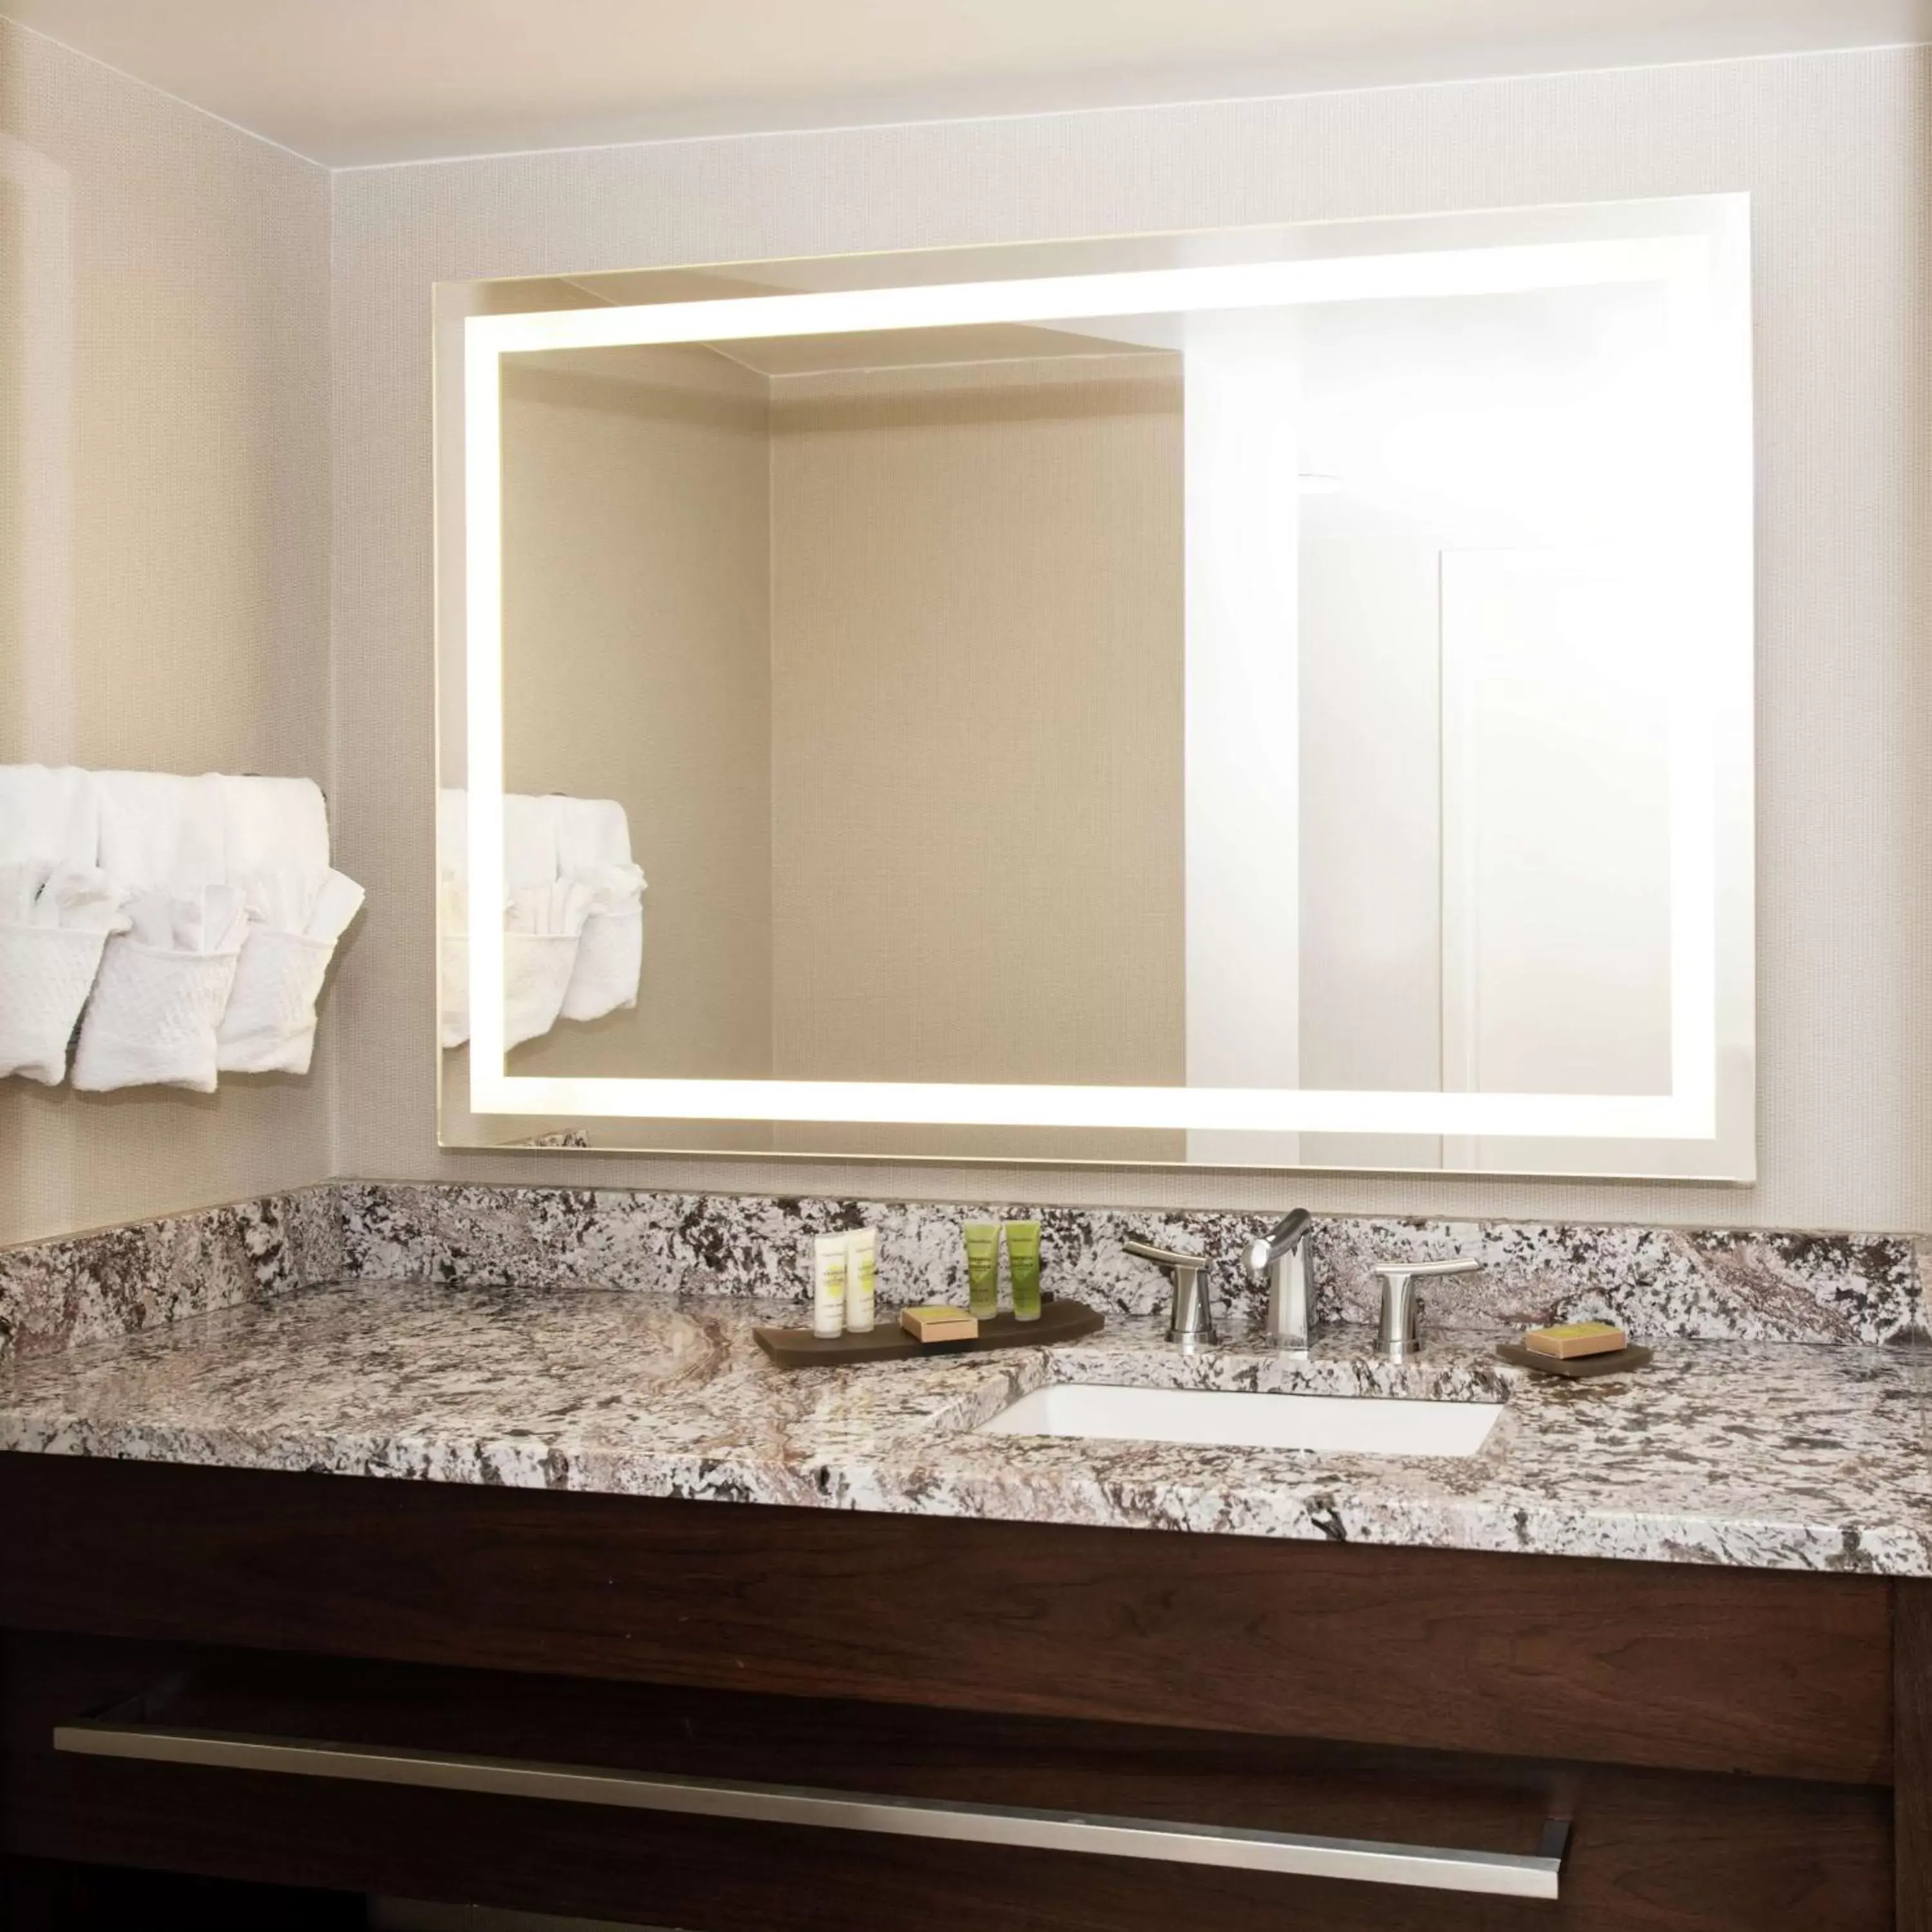 Bathroom in Hilton Arlington National Landing